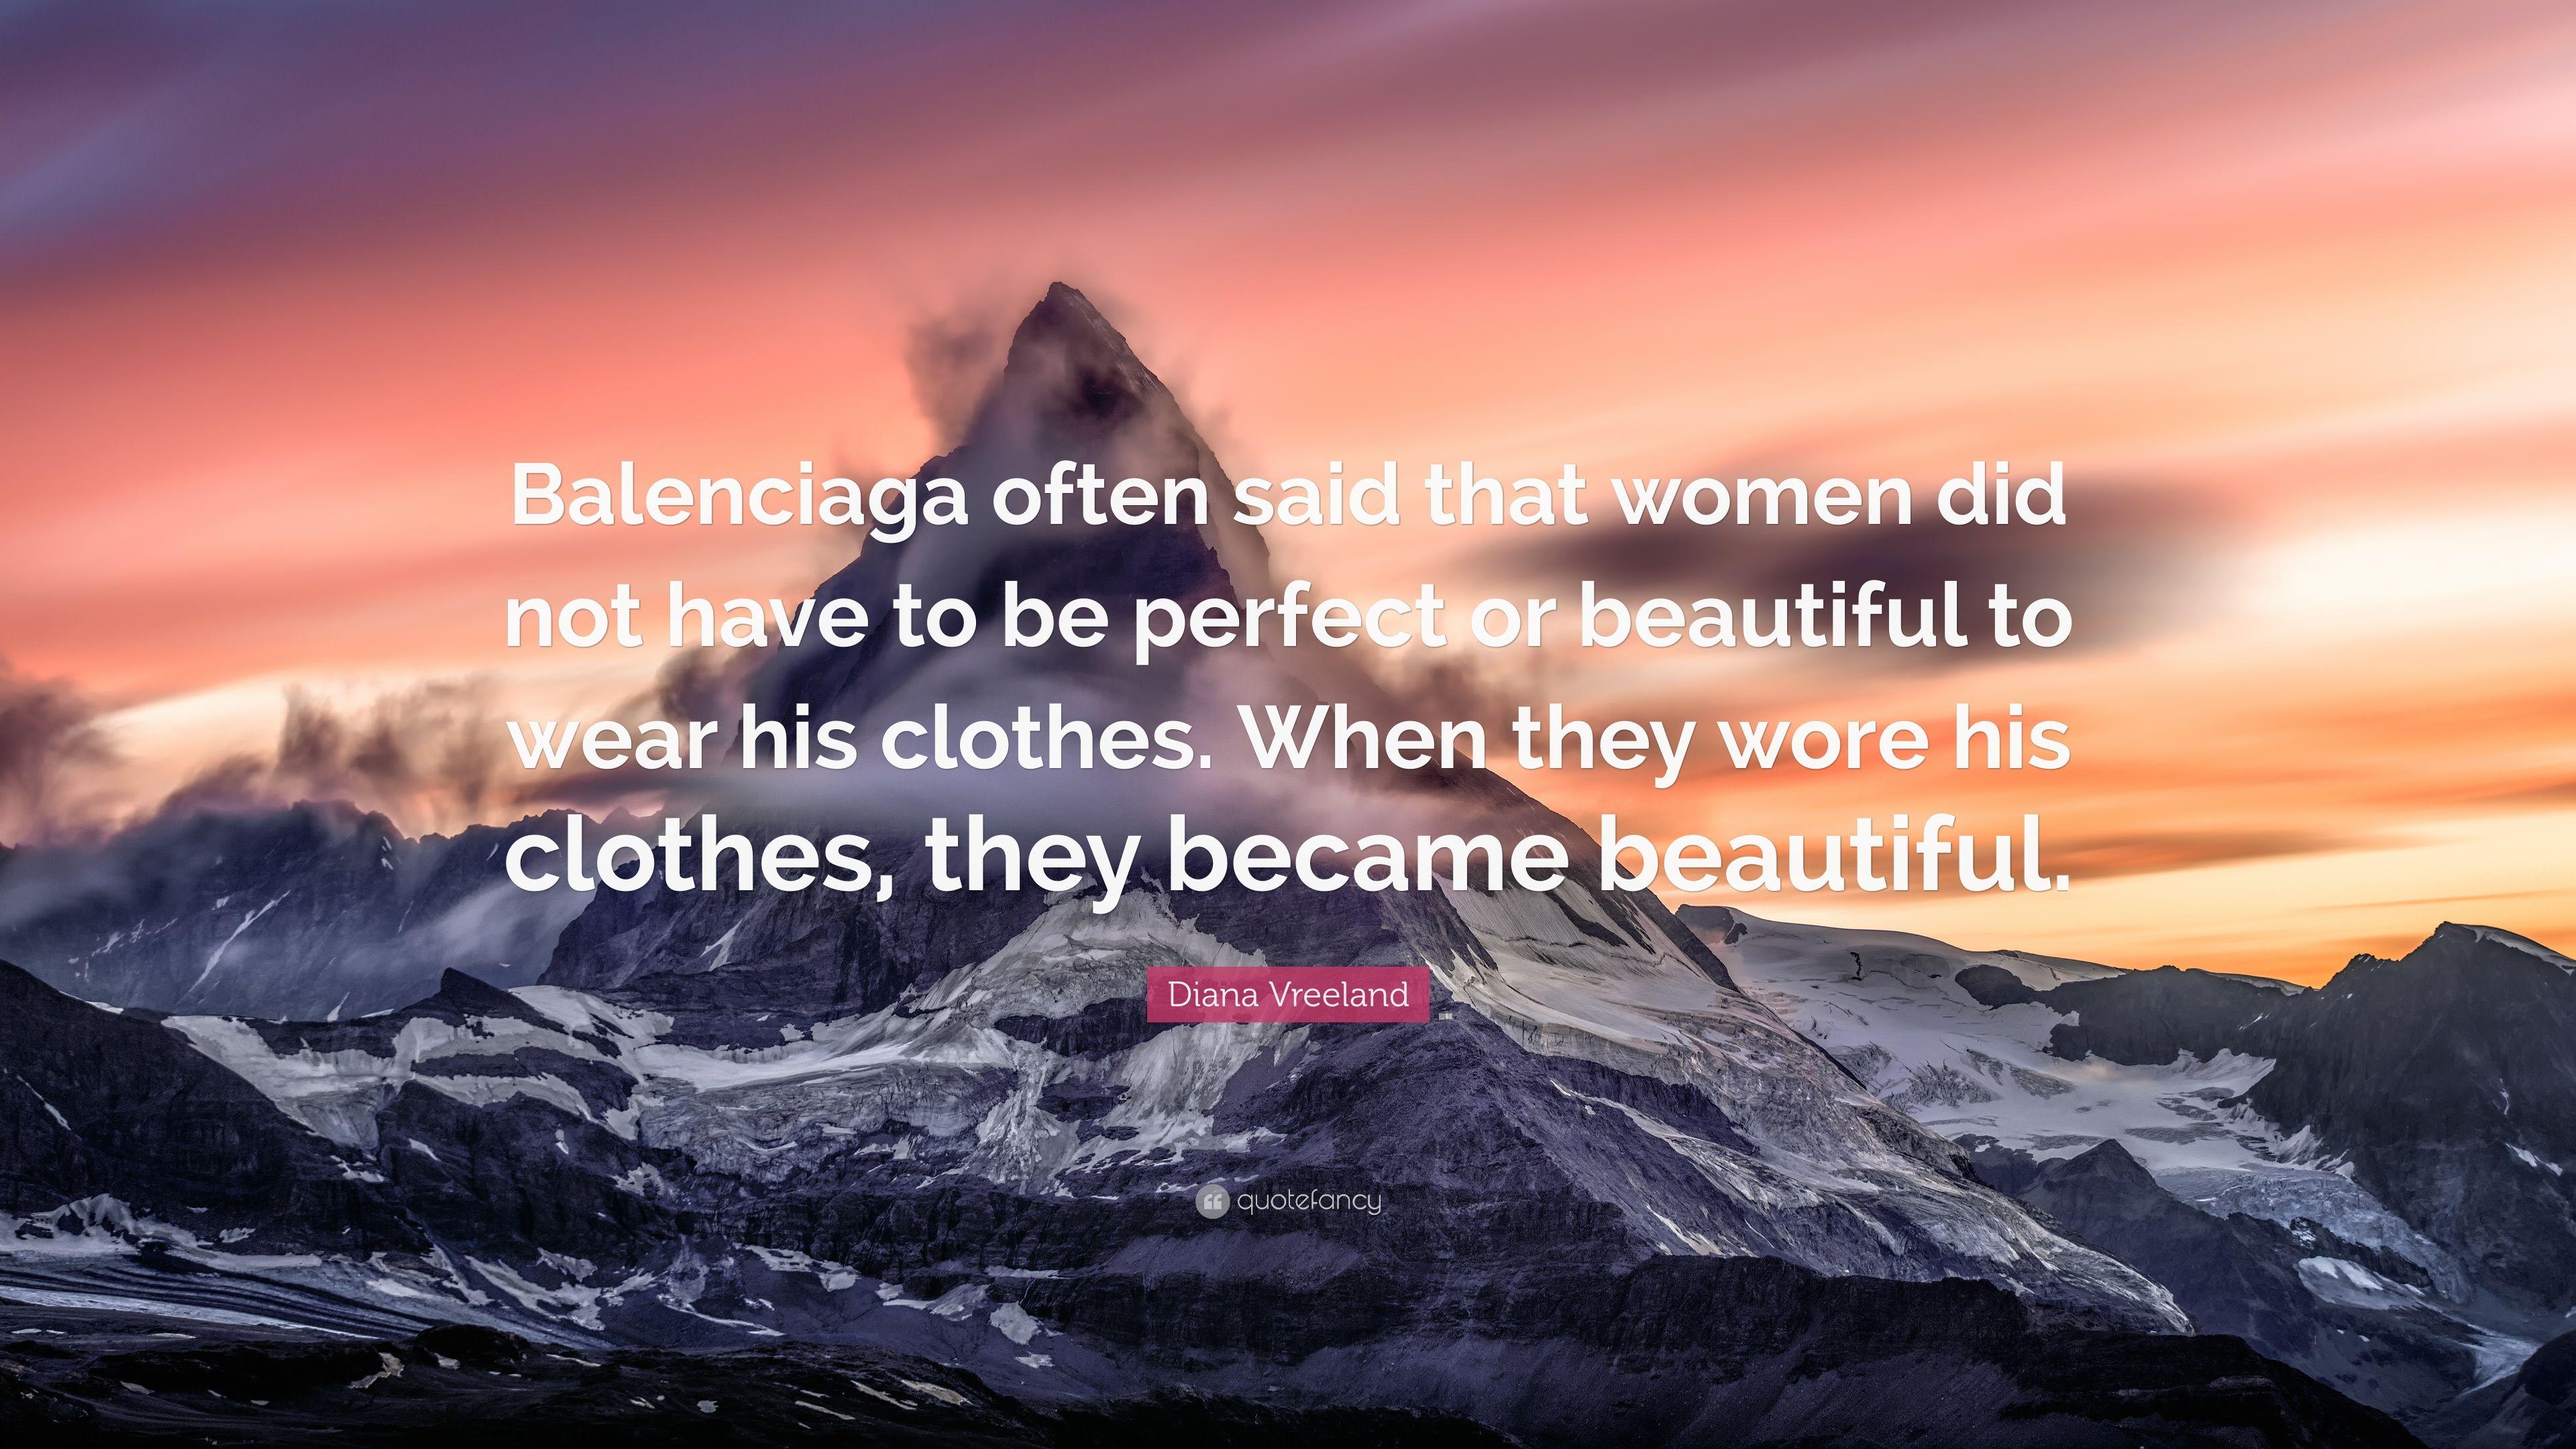 Diana Vreeland Quote: “Balenciaga often said that women did not